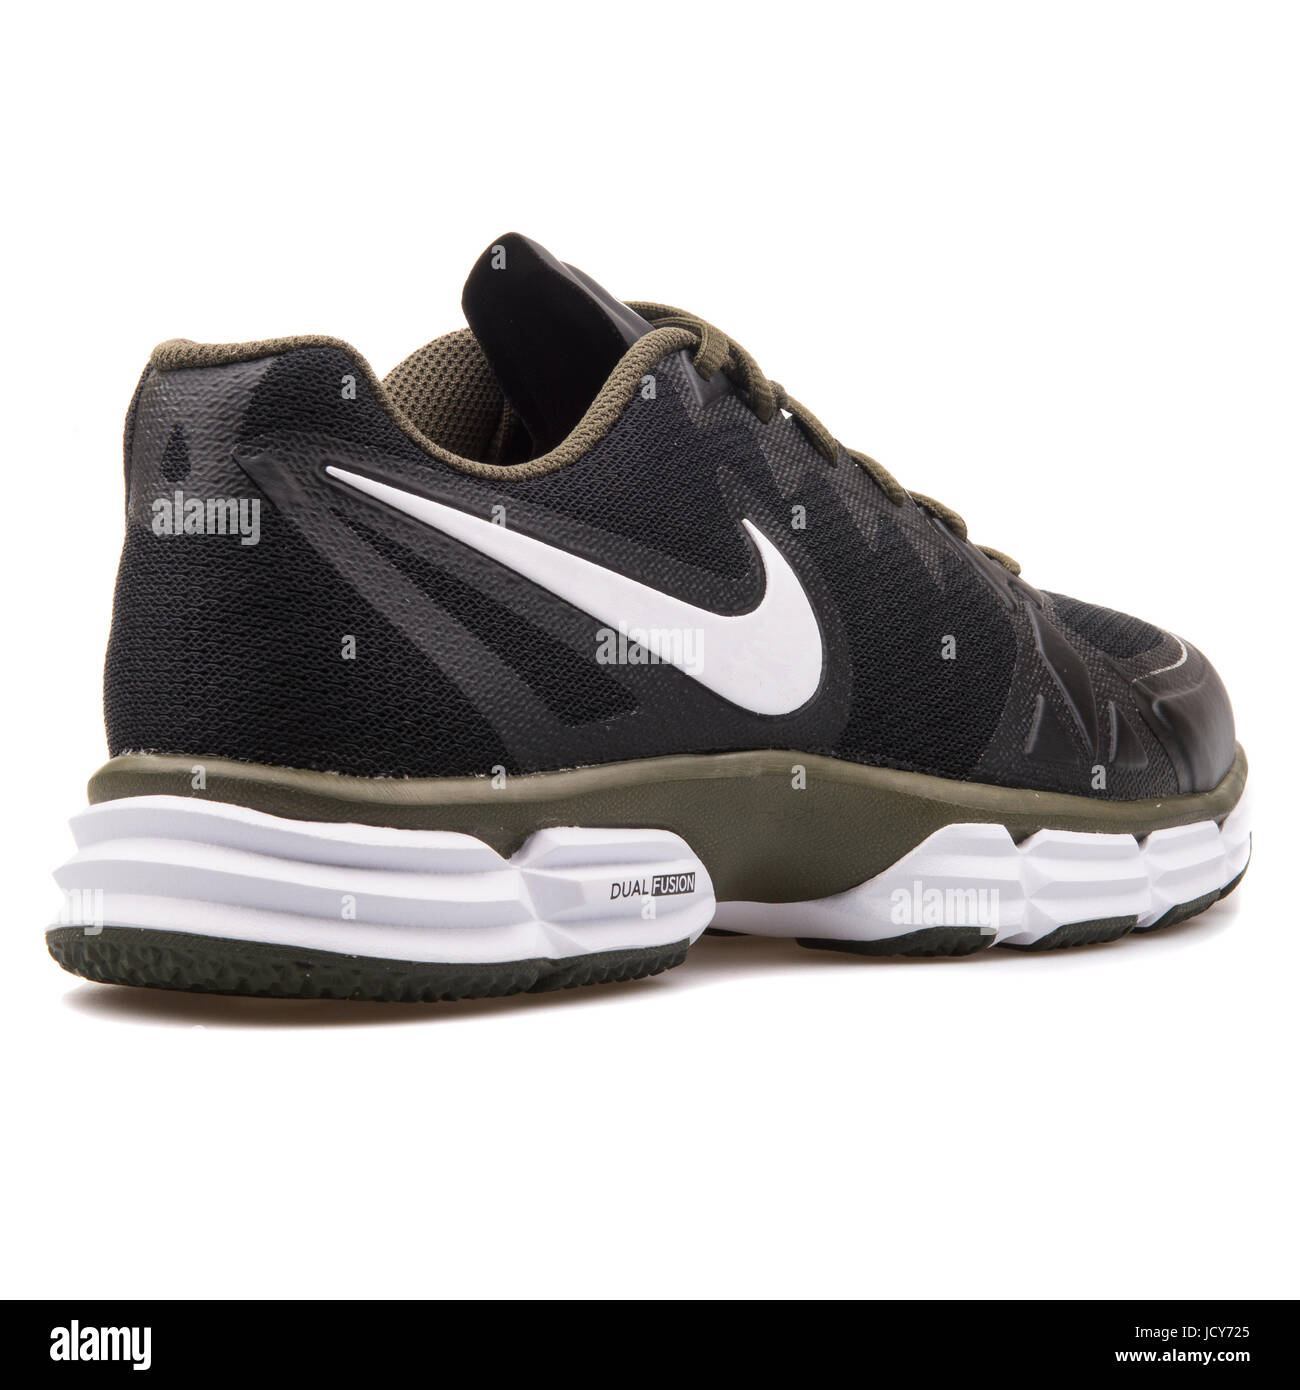 Nike Dual Fusion TR 6 schwarz und Khaki Men's Laufschuhe - 704889-013  Stockfotografie - Alamy